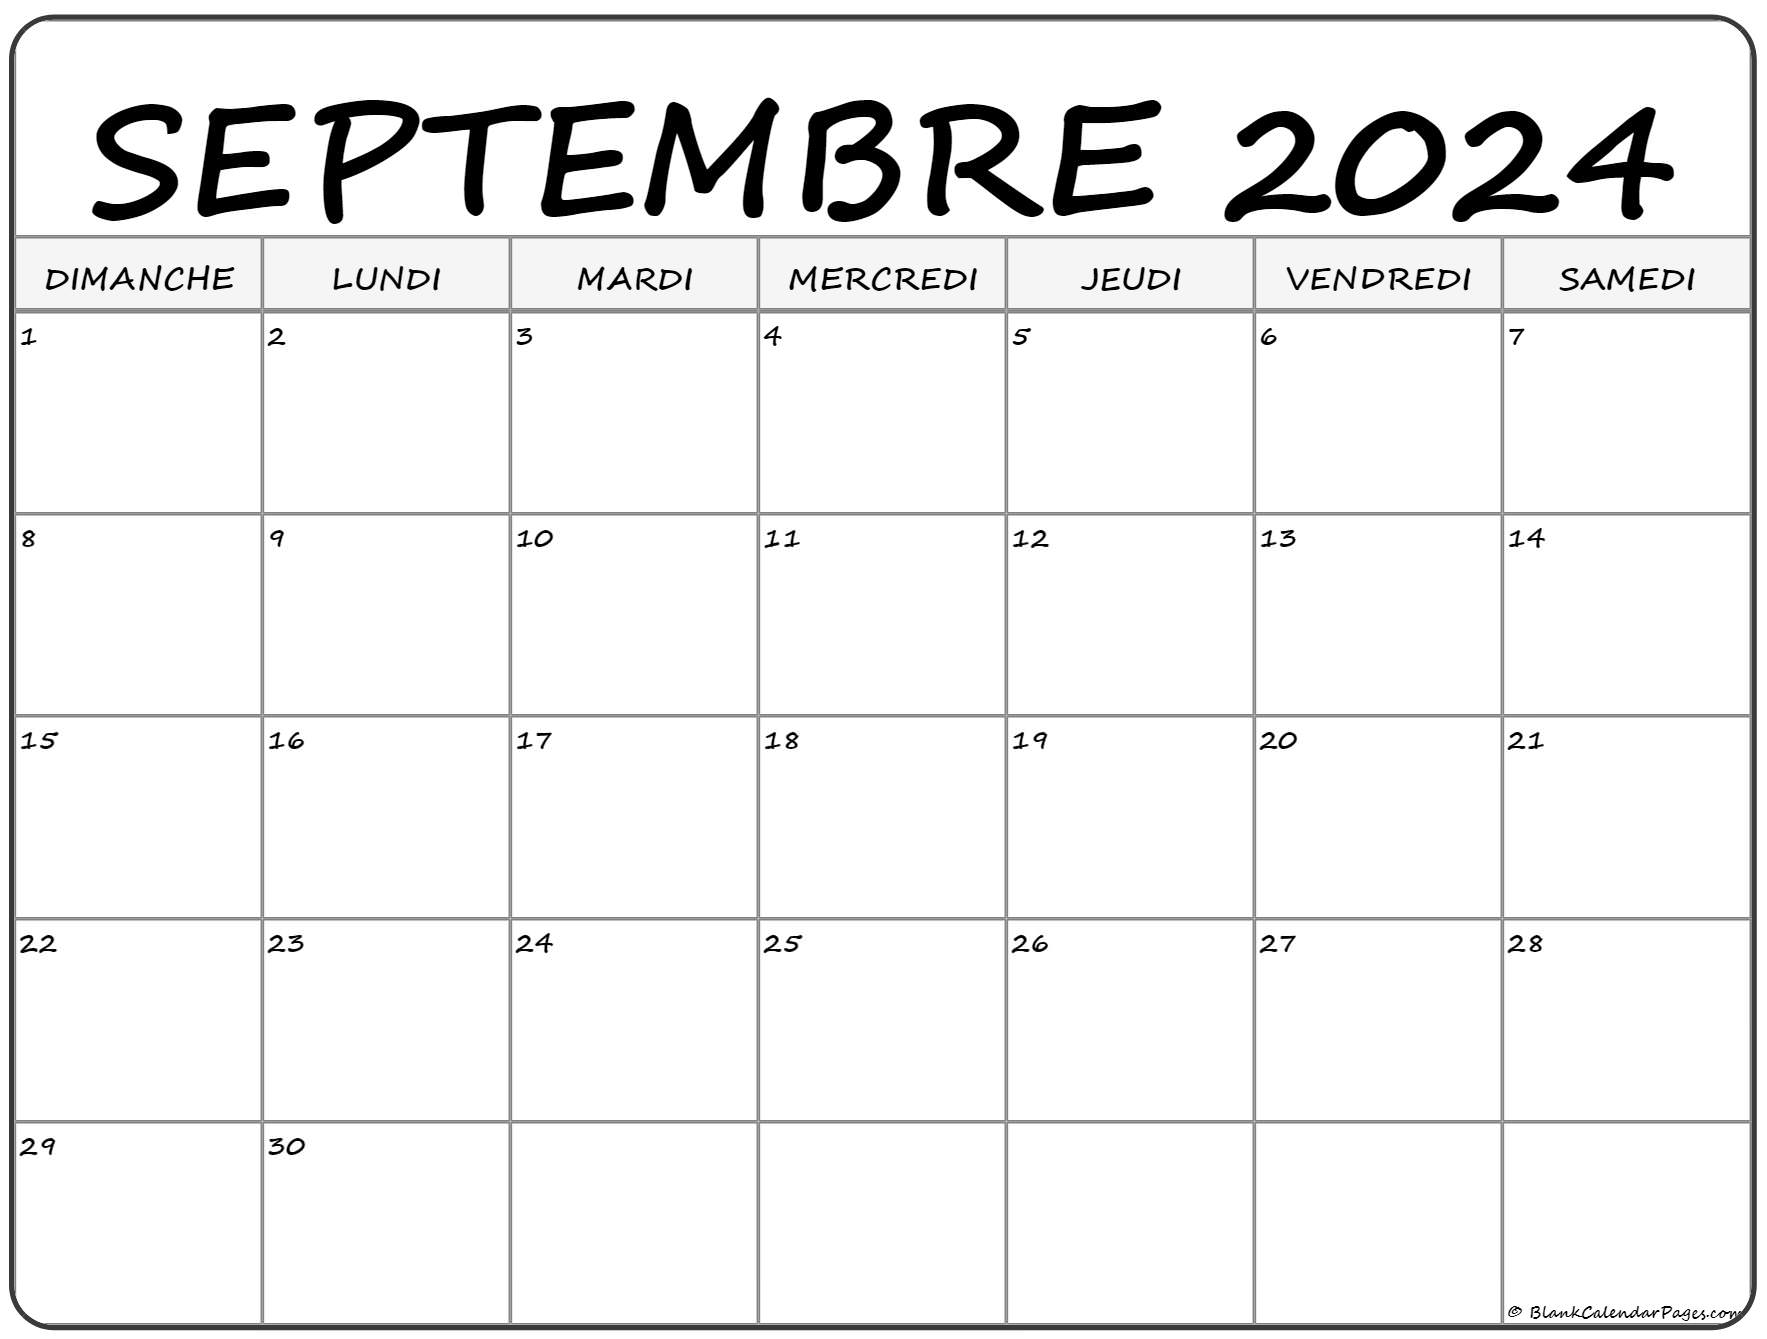 https://blankcalendarpages.com/printable_calendar/calendrier1/septembre-2024-calendrier-fr1.jpg